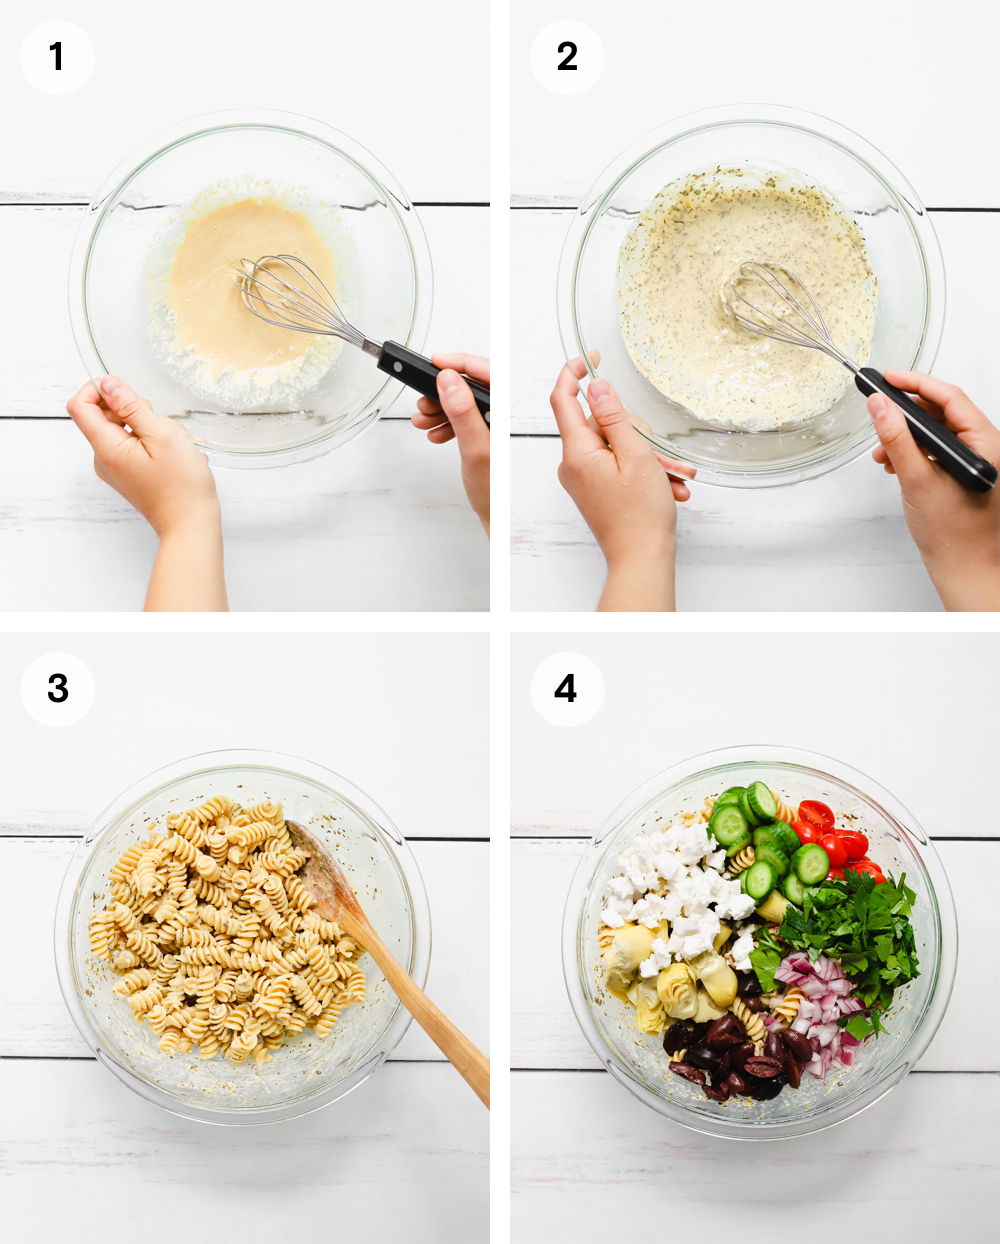 How to make a vegan greek salad with tahini lemon dressing